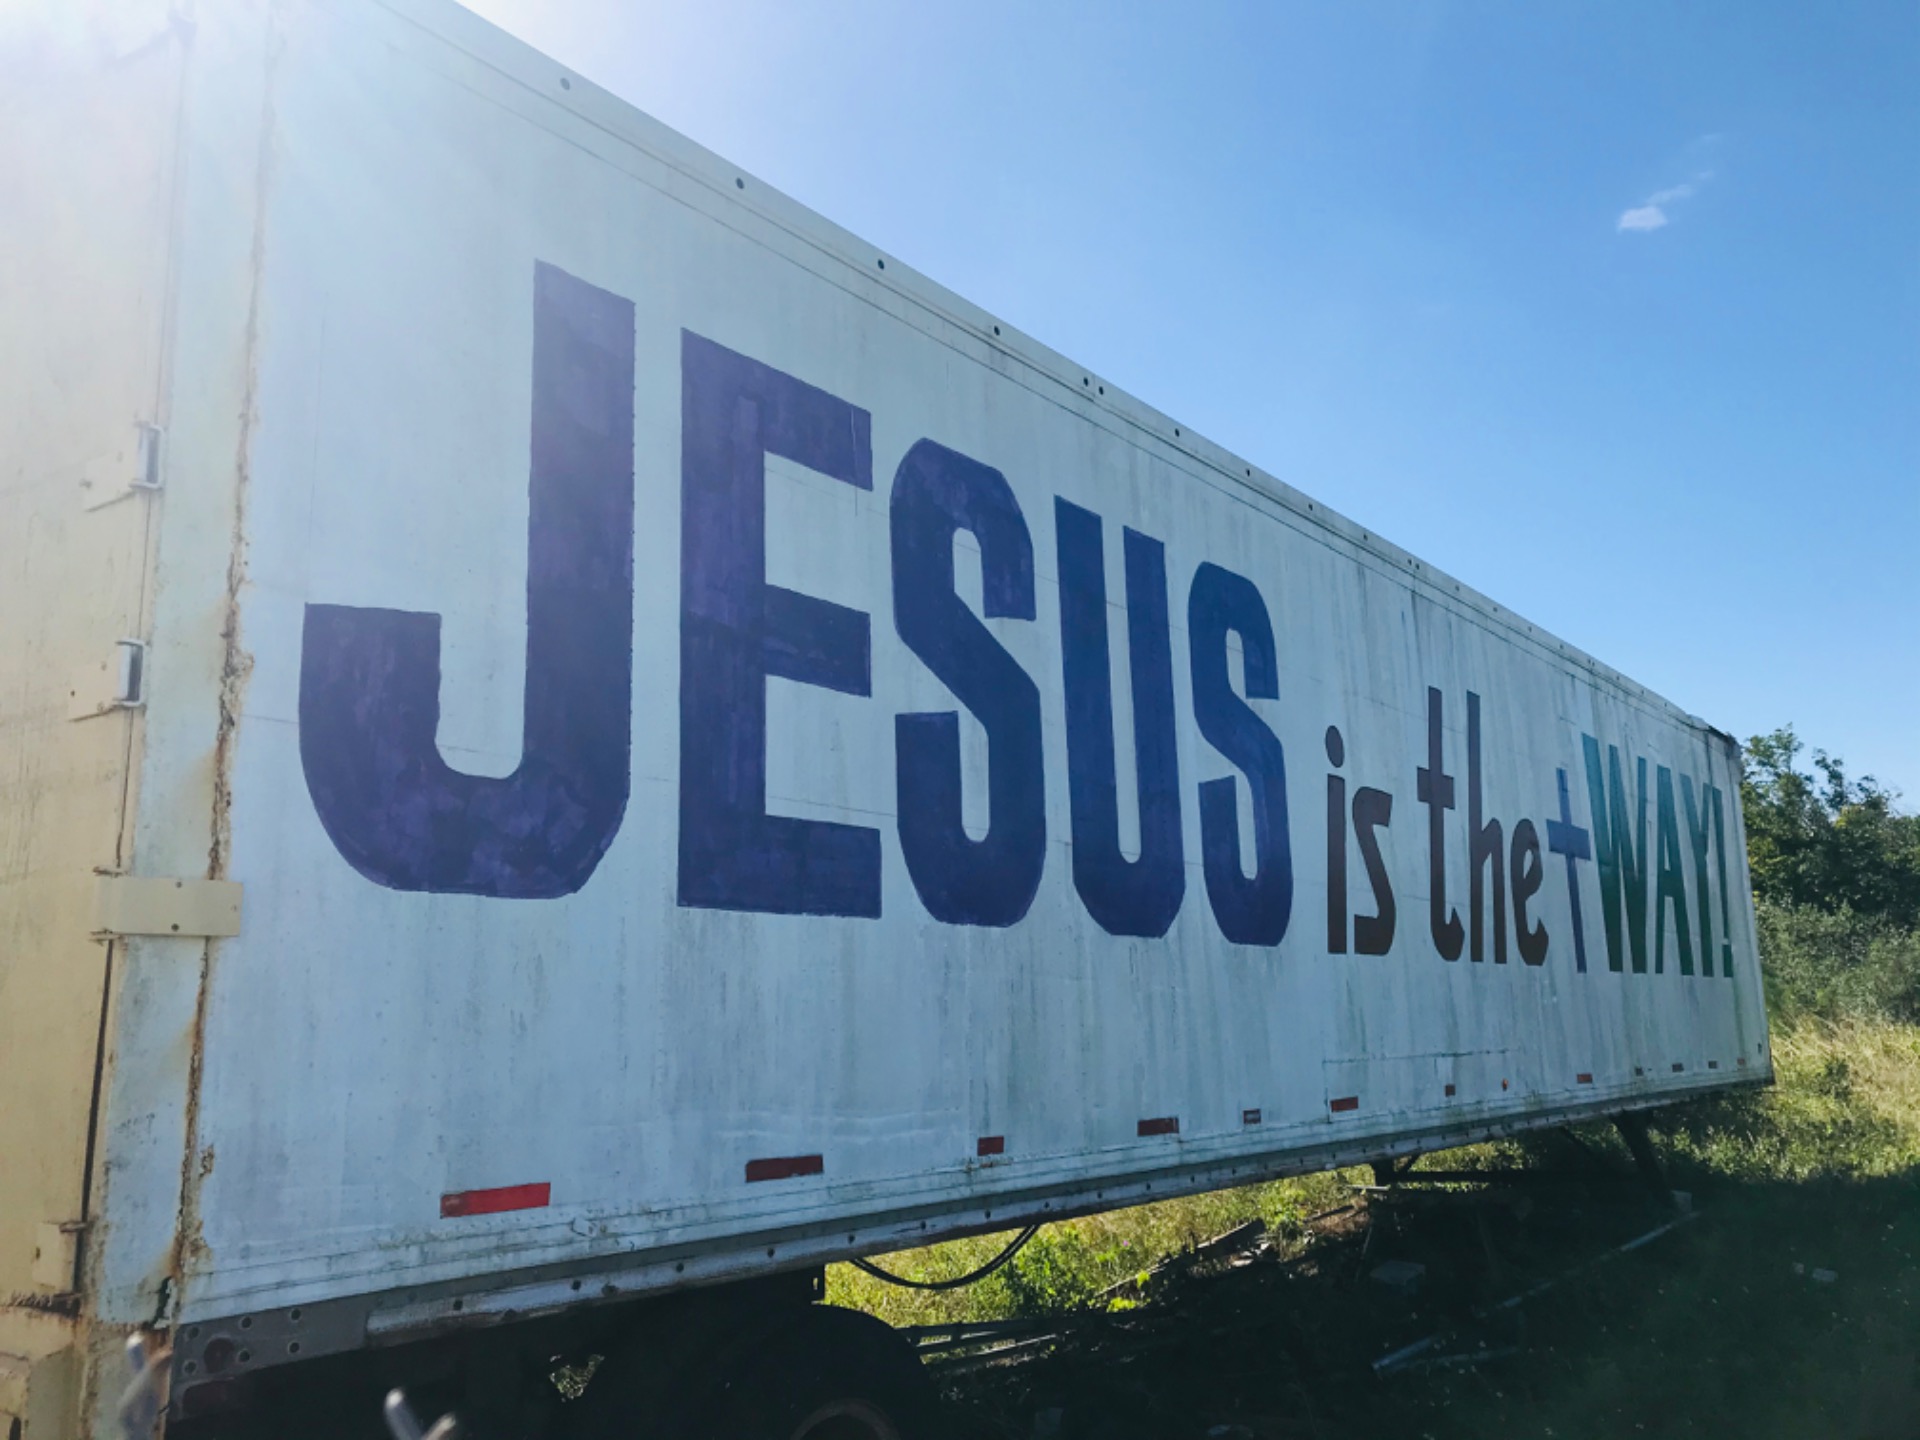 Jesus showed the way. 